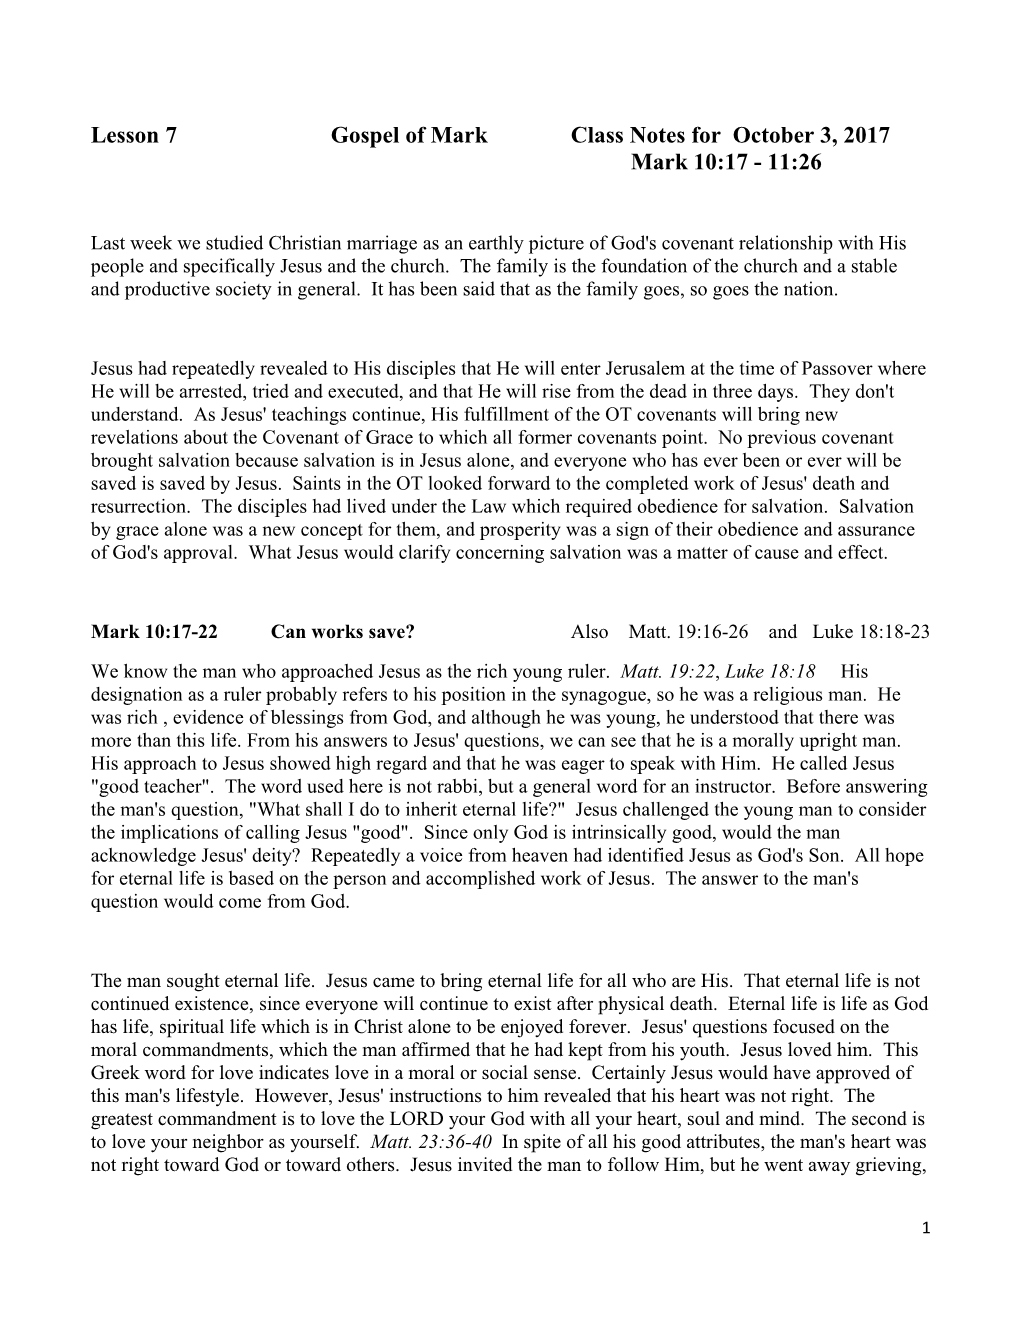 Lesson 7Gospel of Markclass Notes for October 3, 2017 Mark 10:17 - 11:26